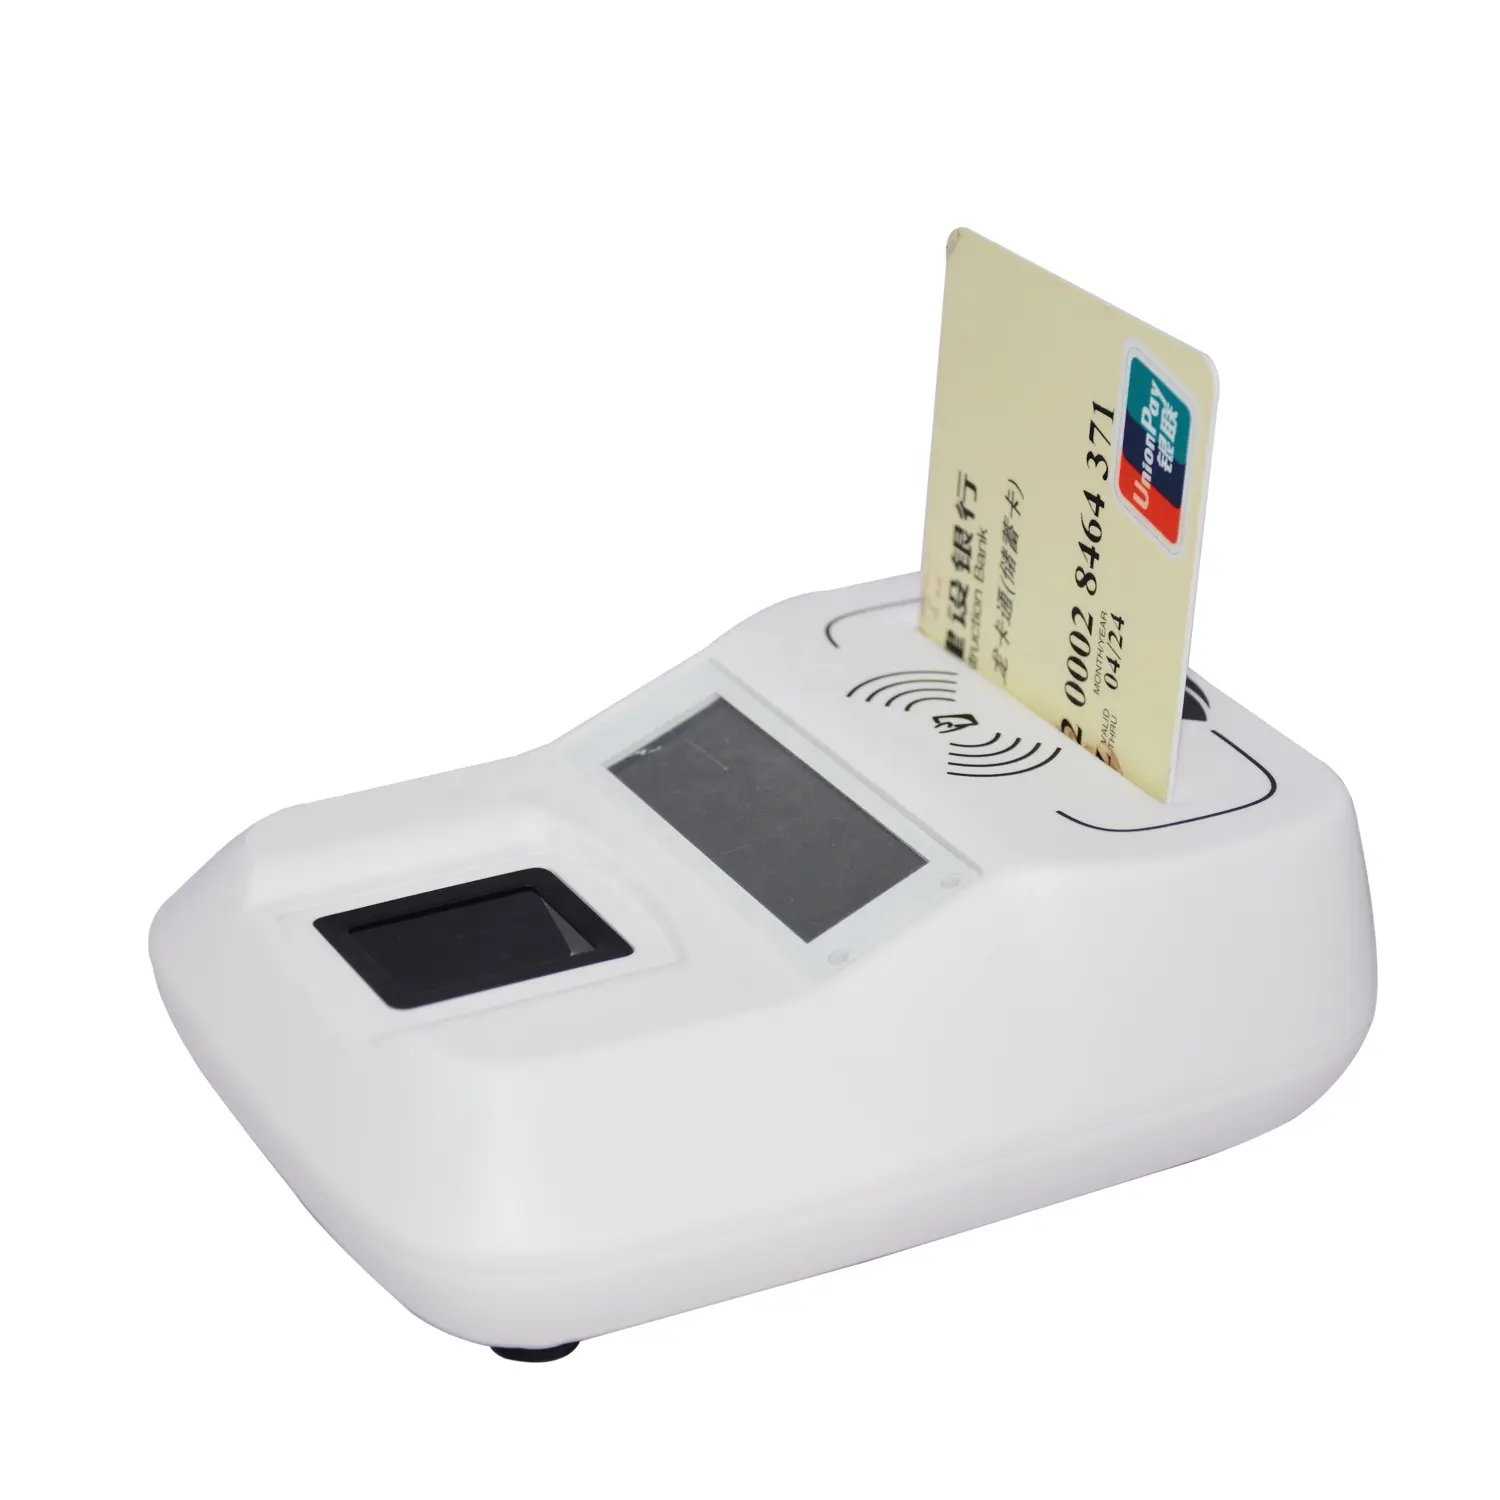 13.56 Mhz Smart Contact Contactless Card Biometric Fingerprint Reader Scanner With SDK HD8-FI